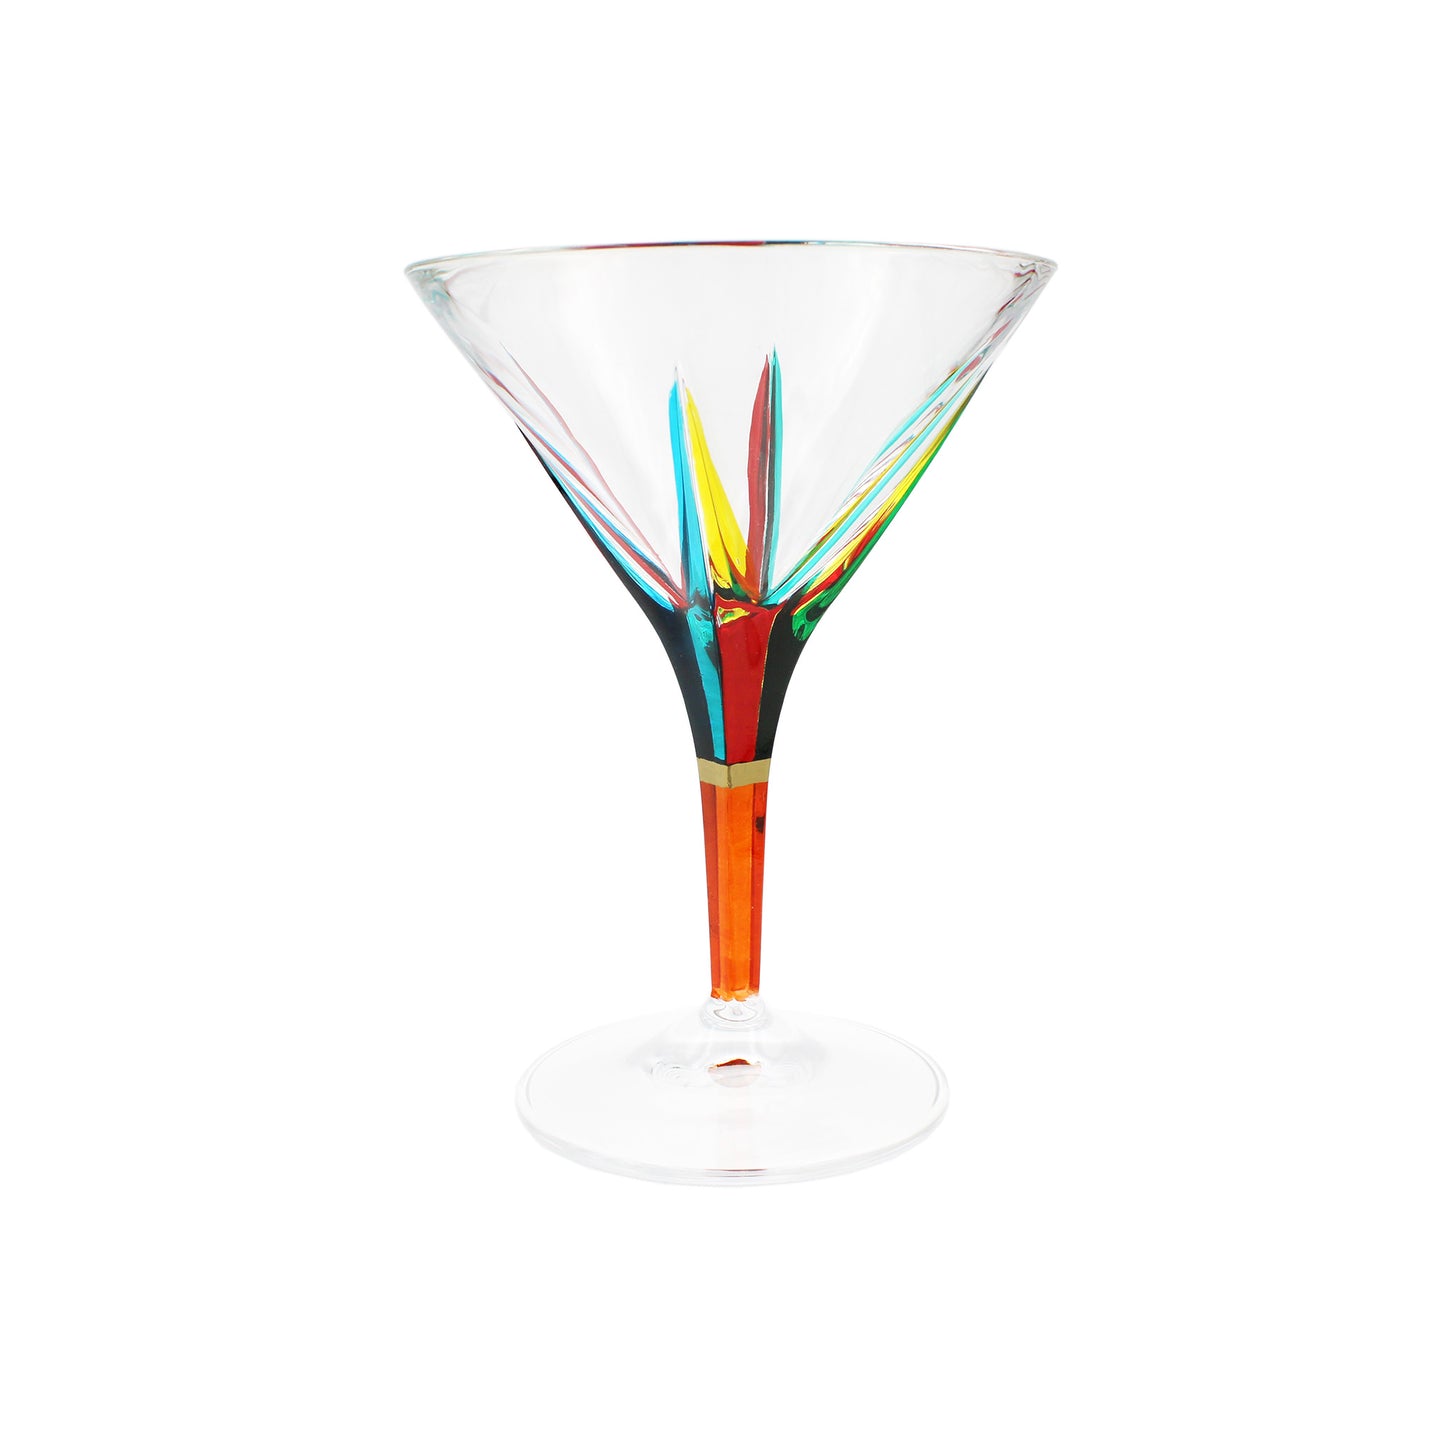 CC Zecchin Fusion Martini Glass in Orange - Chrysler Museum Shop